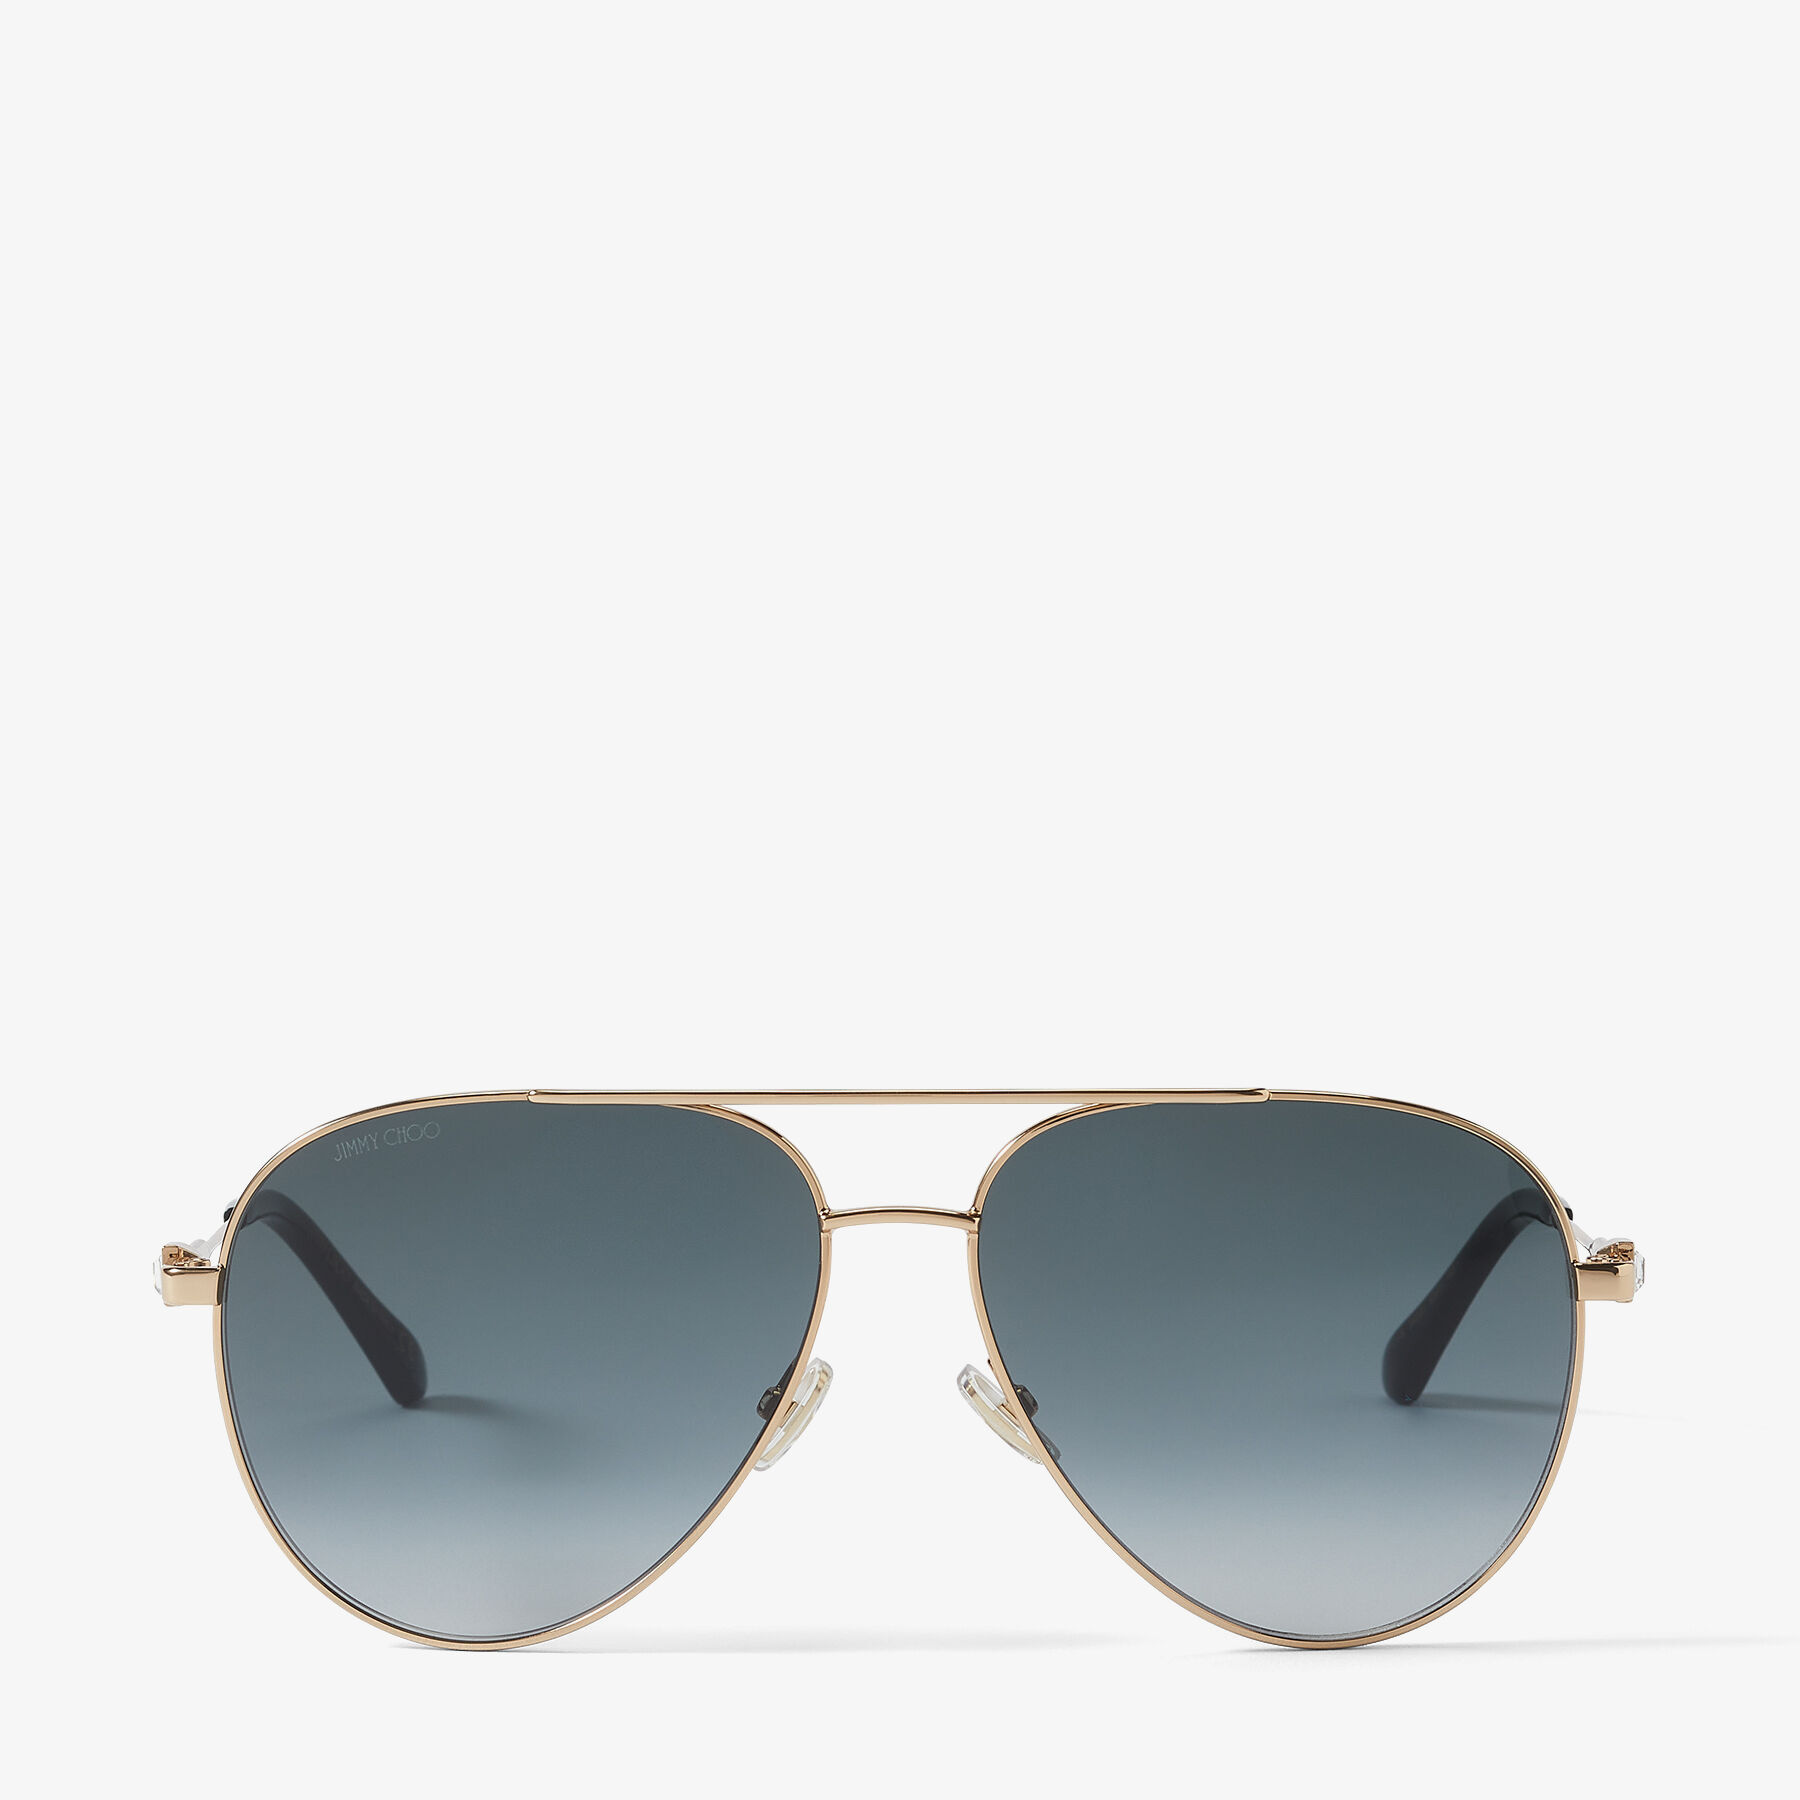 Coole Jimmy Choo Sonnenbrille Accessoires Sonnenbrillen Pilotenbrillen 